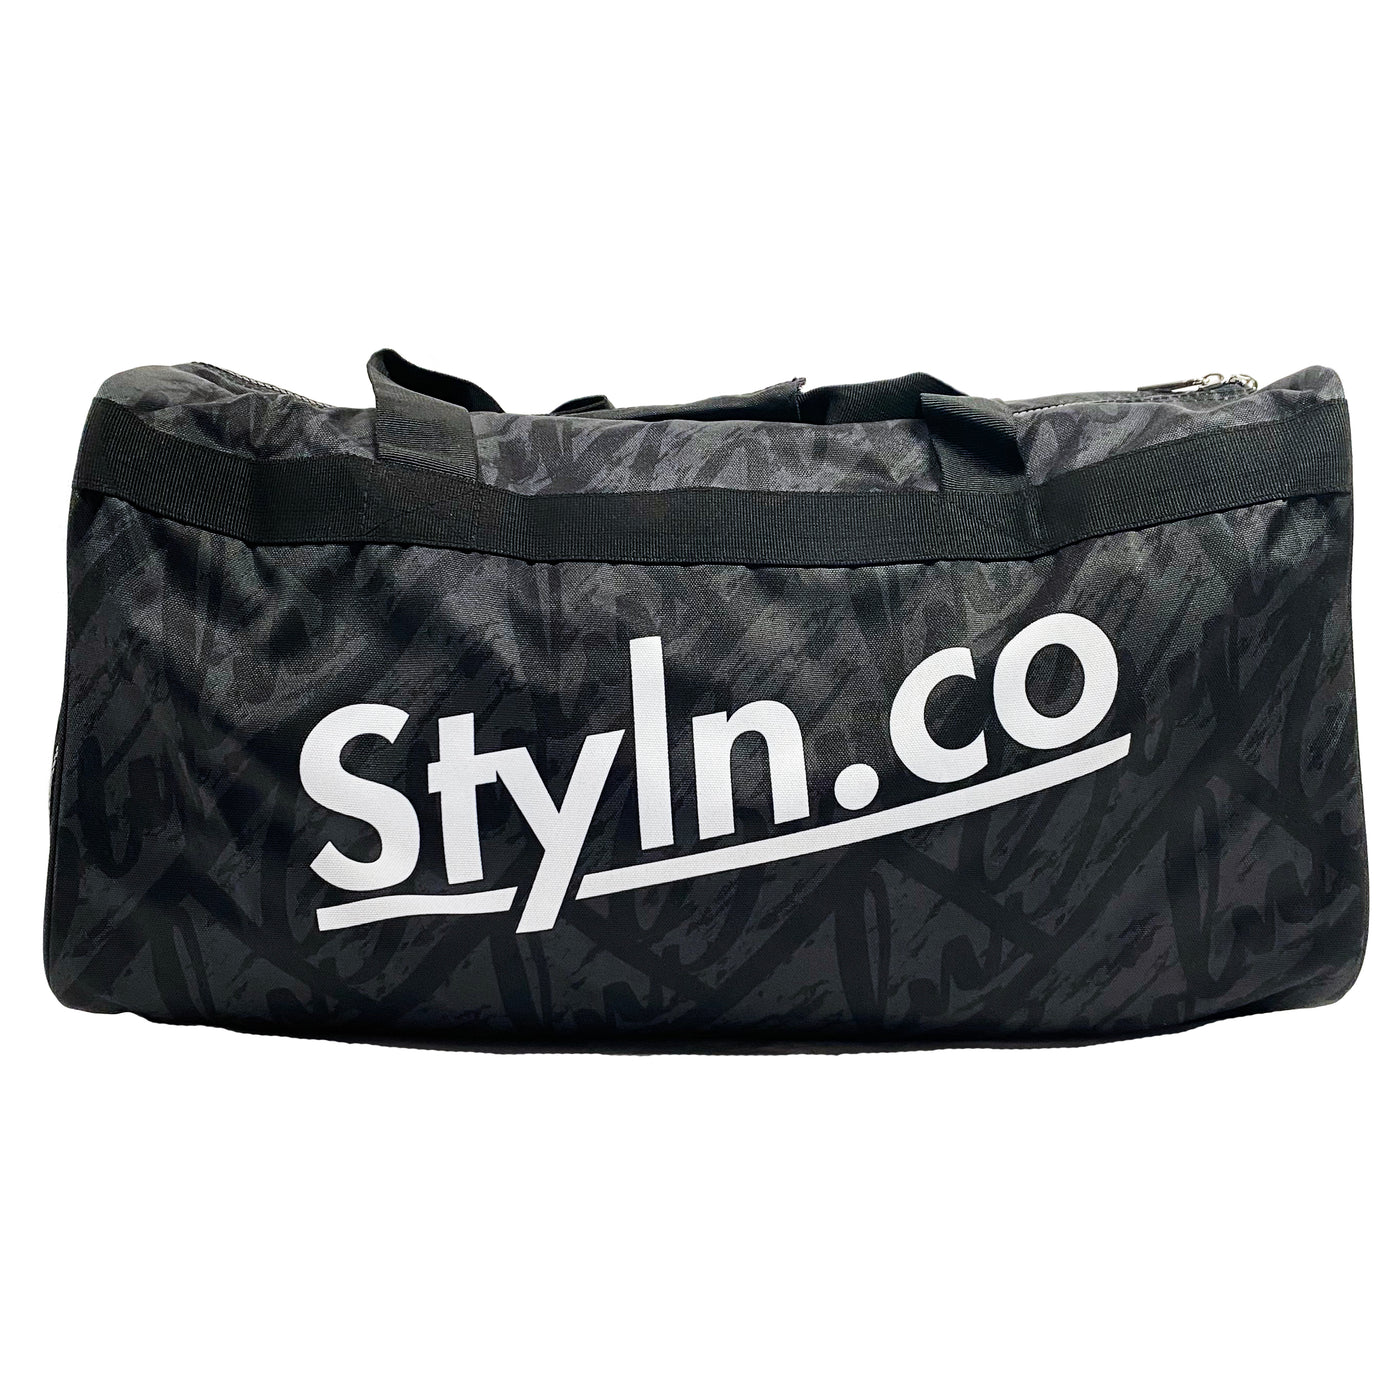 STYLN® Duffle Bag Black